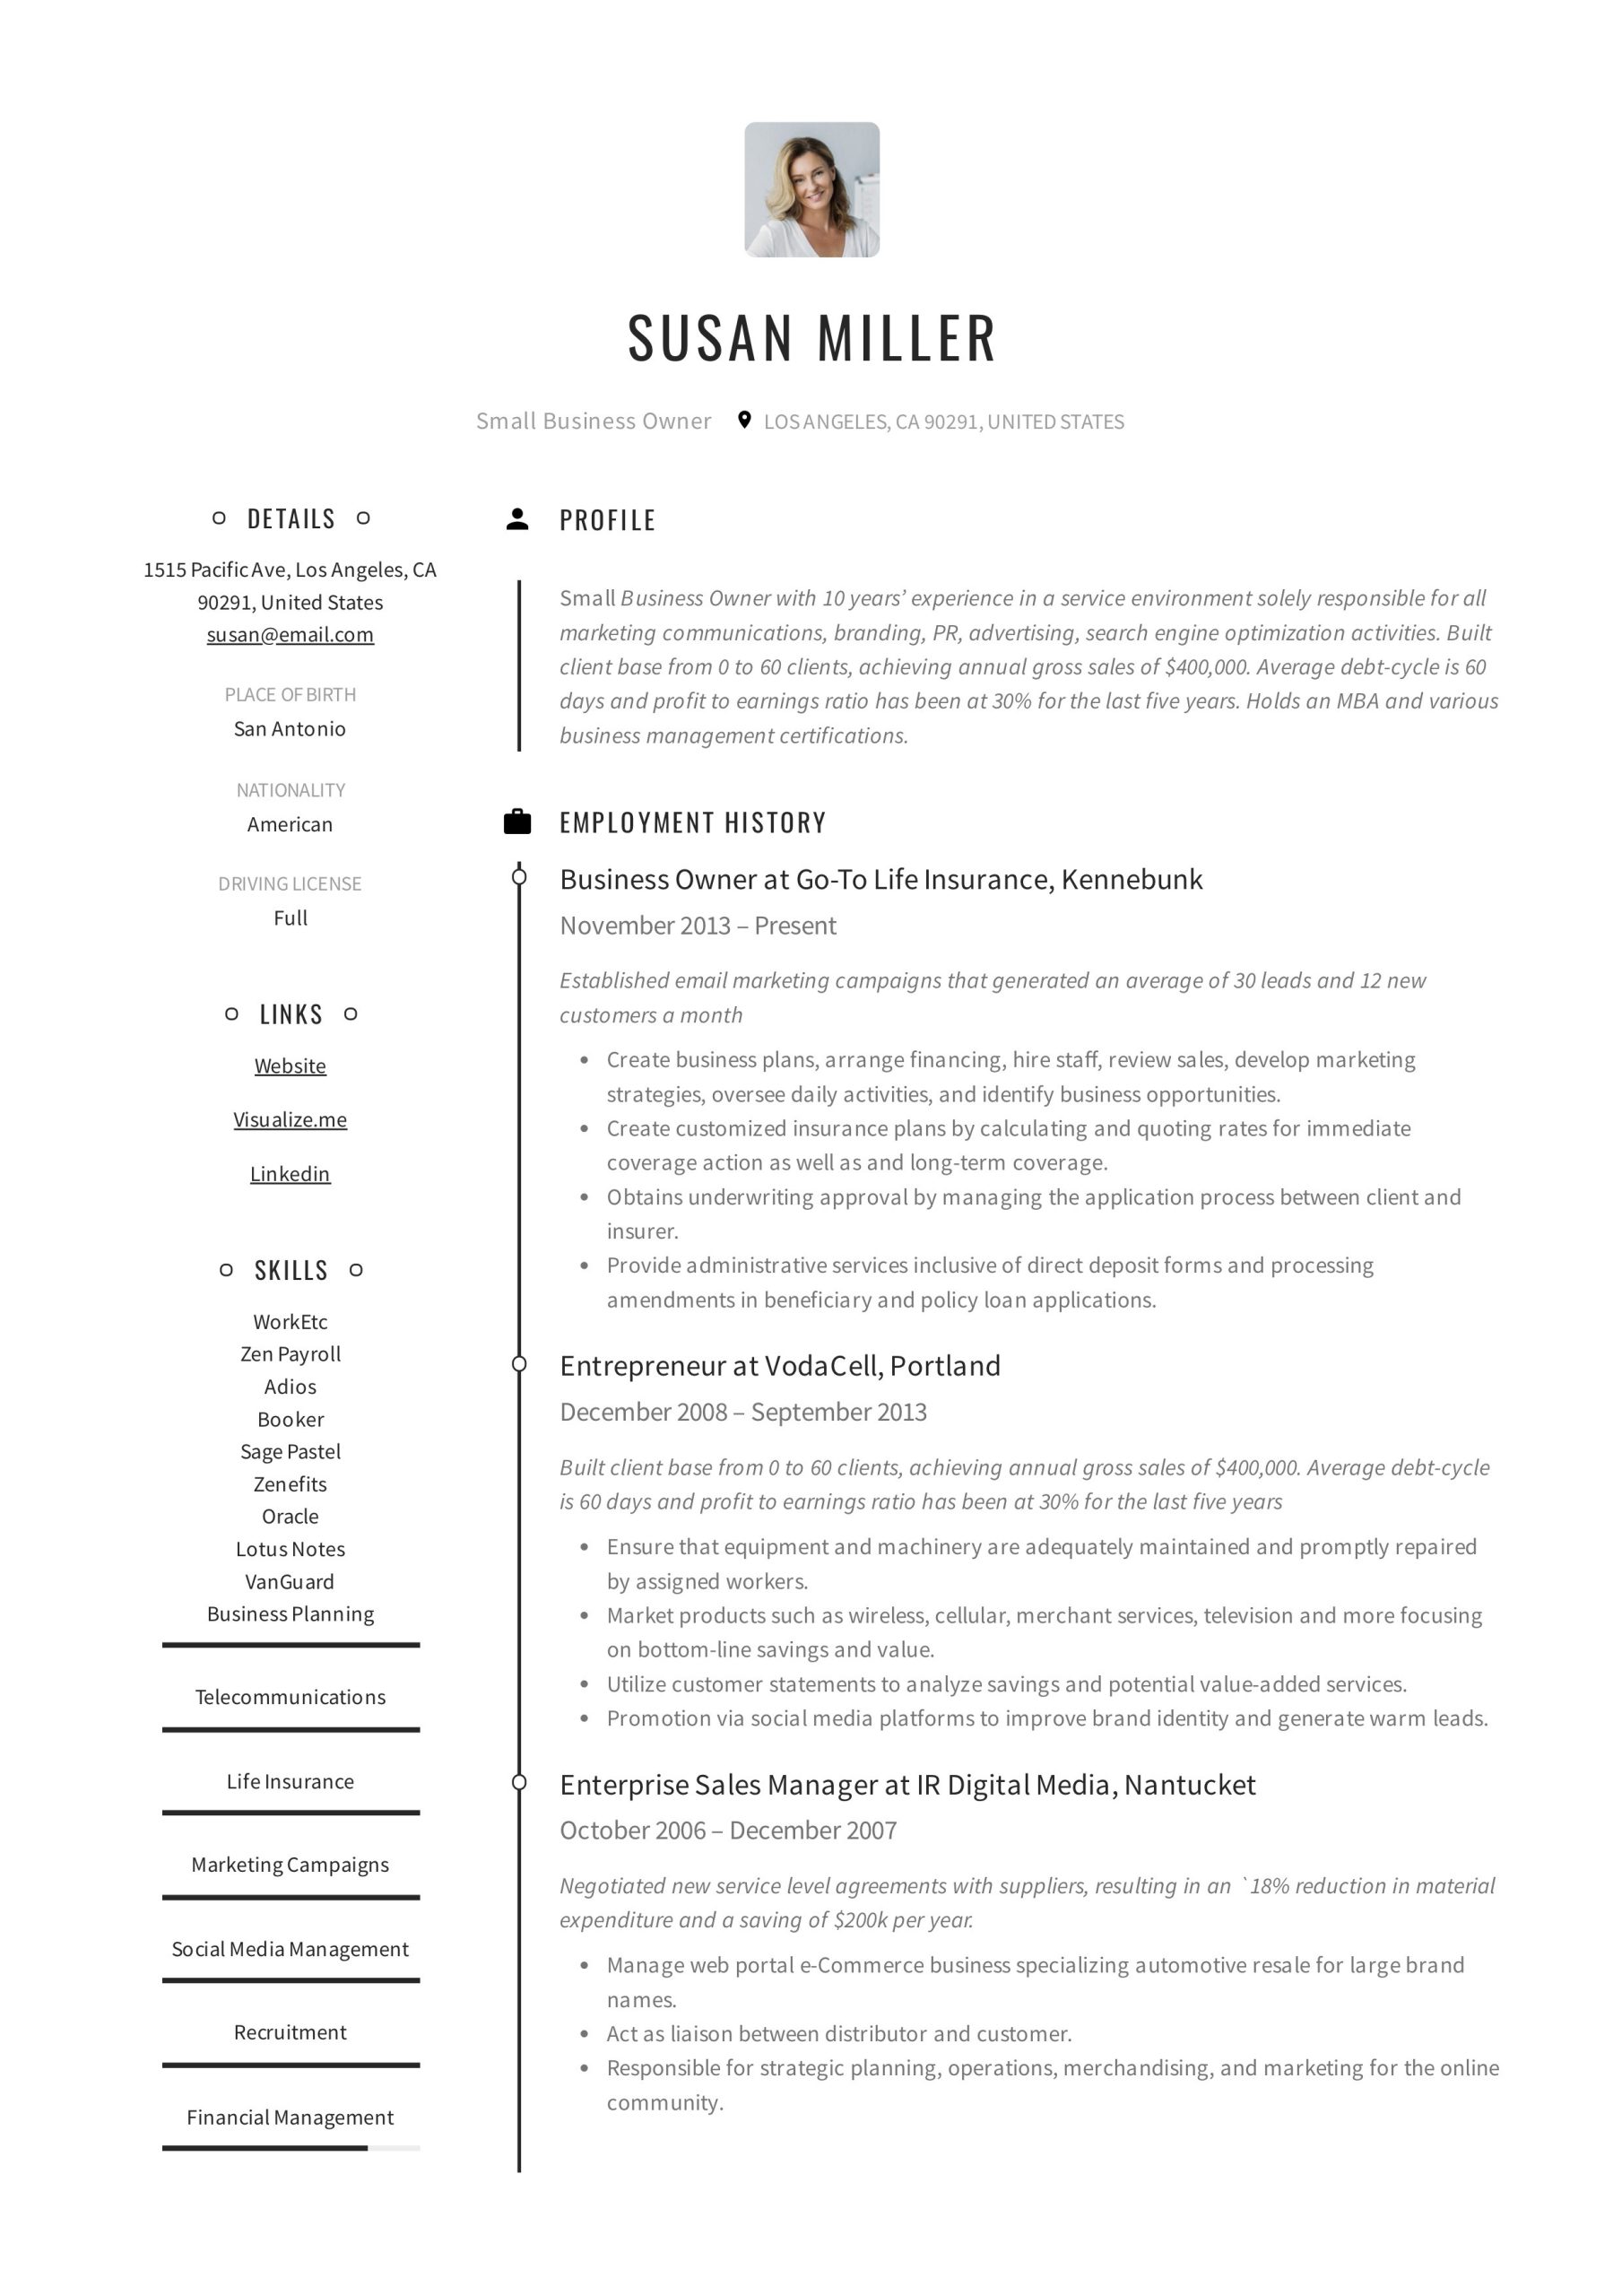 Sample Resume Description Of A Retail Business Owner Small Business Owner Resumes  19 Examples Pdf 2022